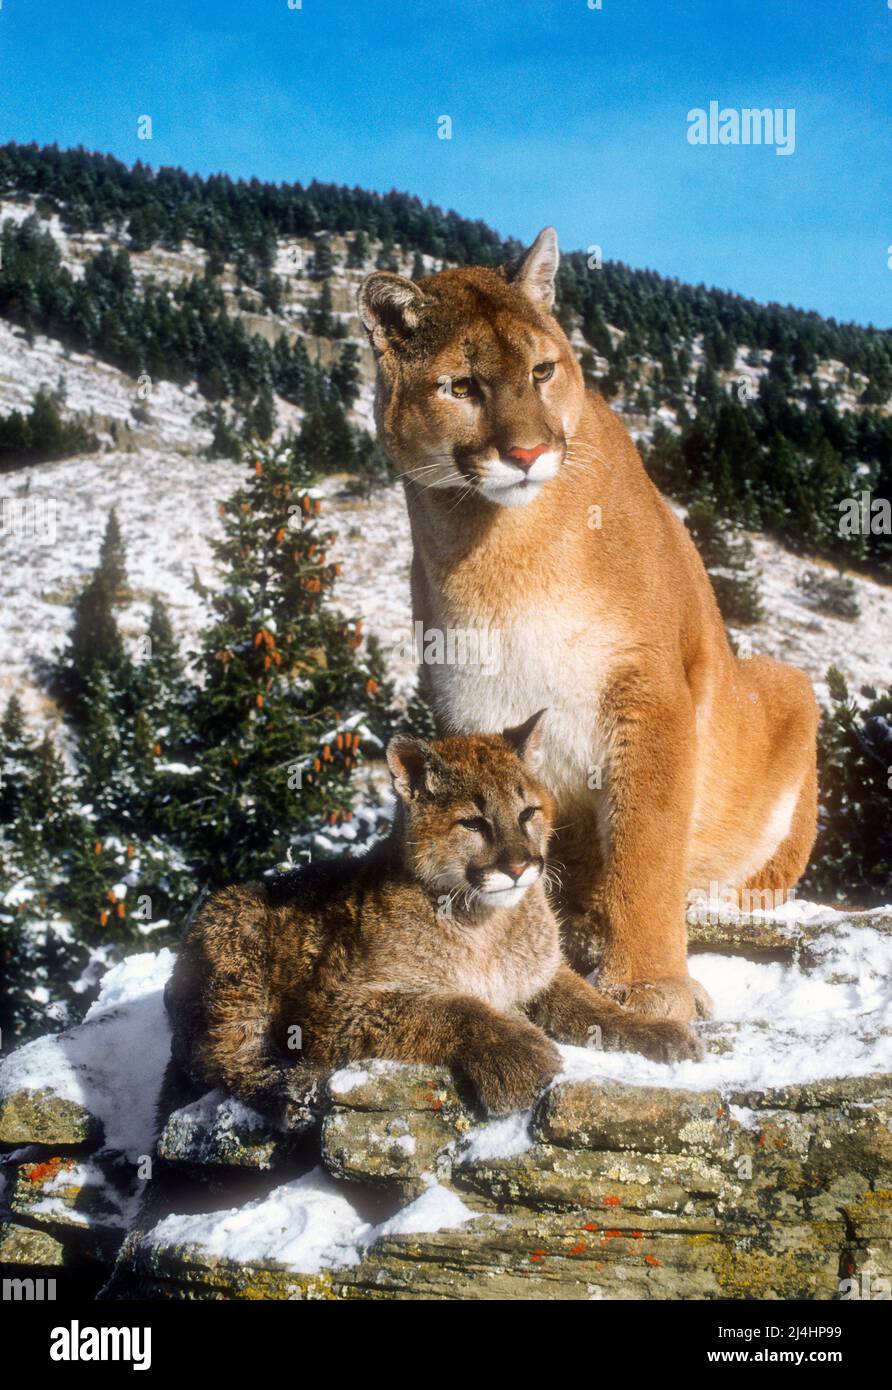 North America; United States; Montana; Bridger Mountains; Wildlife; Mammals; Mountain Lion or Cougar; Felis concolor Stock Photo